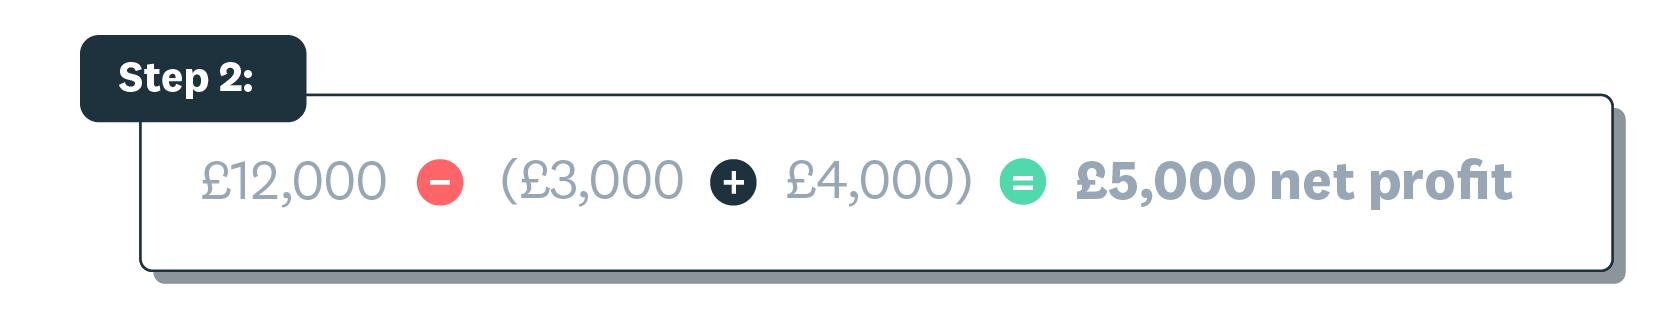 Step 2 example shows £12,000, minus the sum of £3,000 plus £4,000, equals $5,000 net profit.